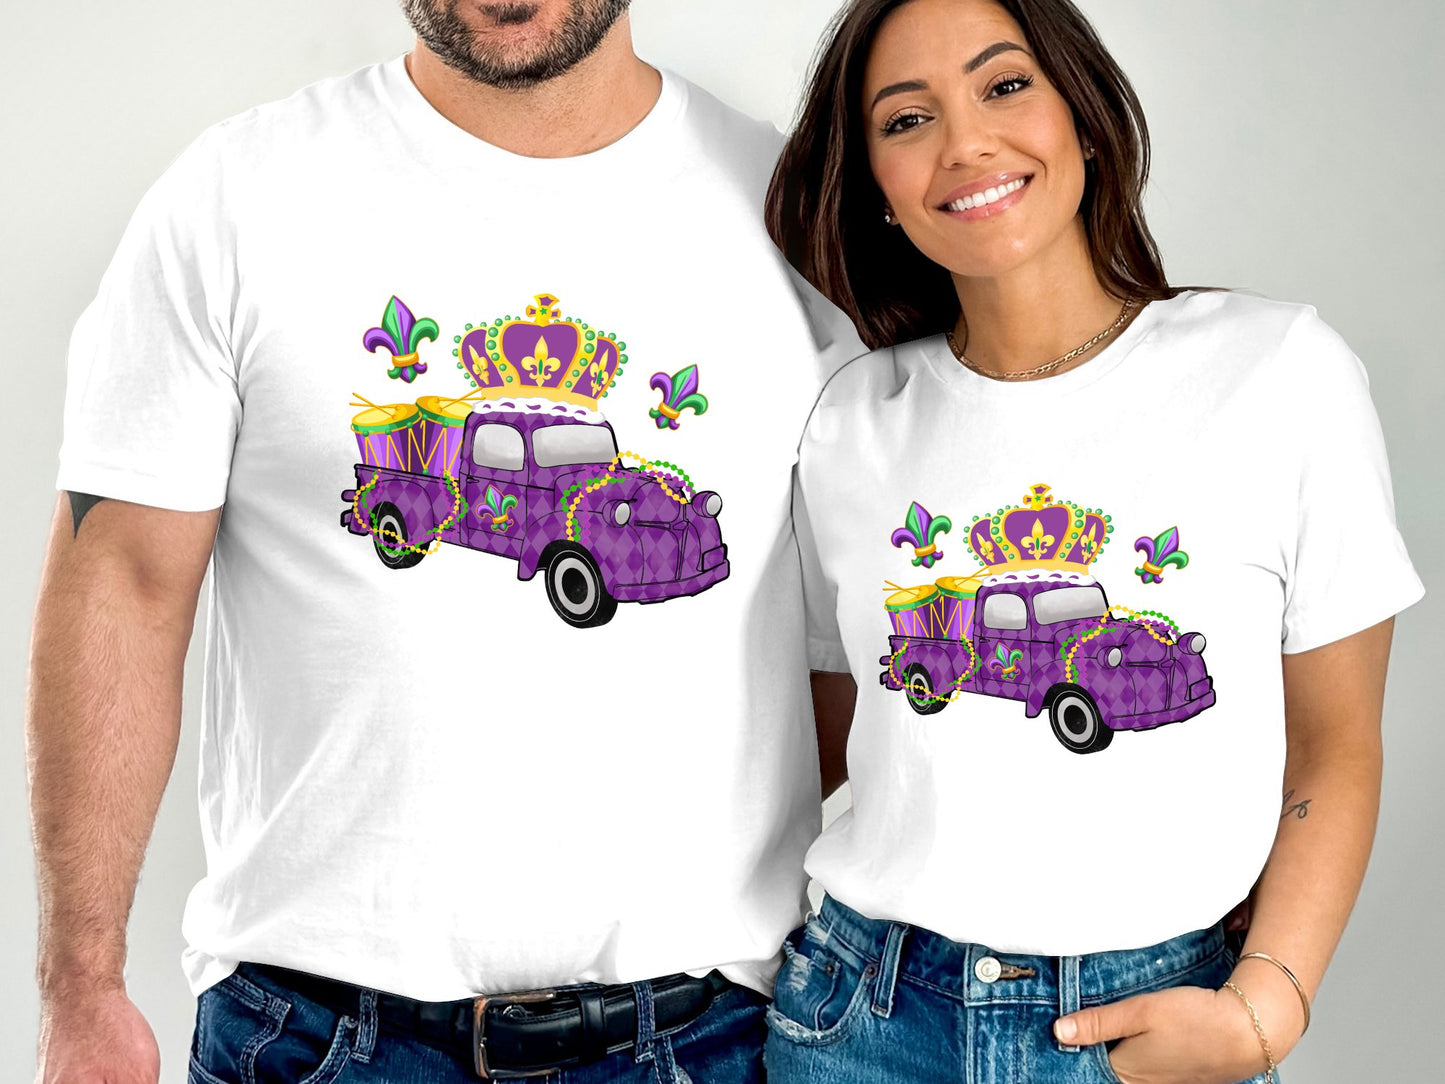 Mardi Gras Truck T-shirt